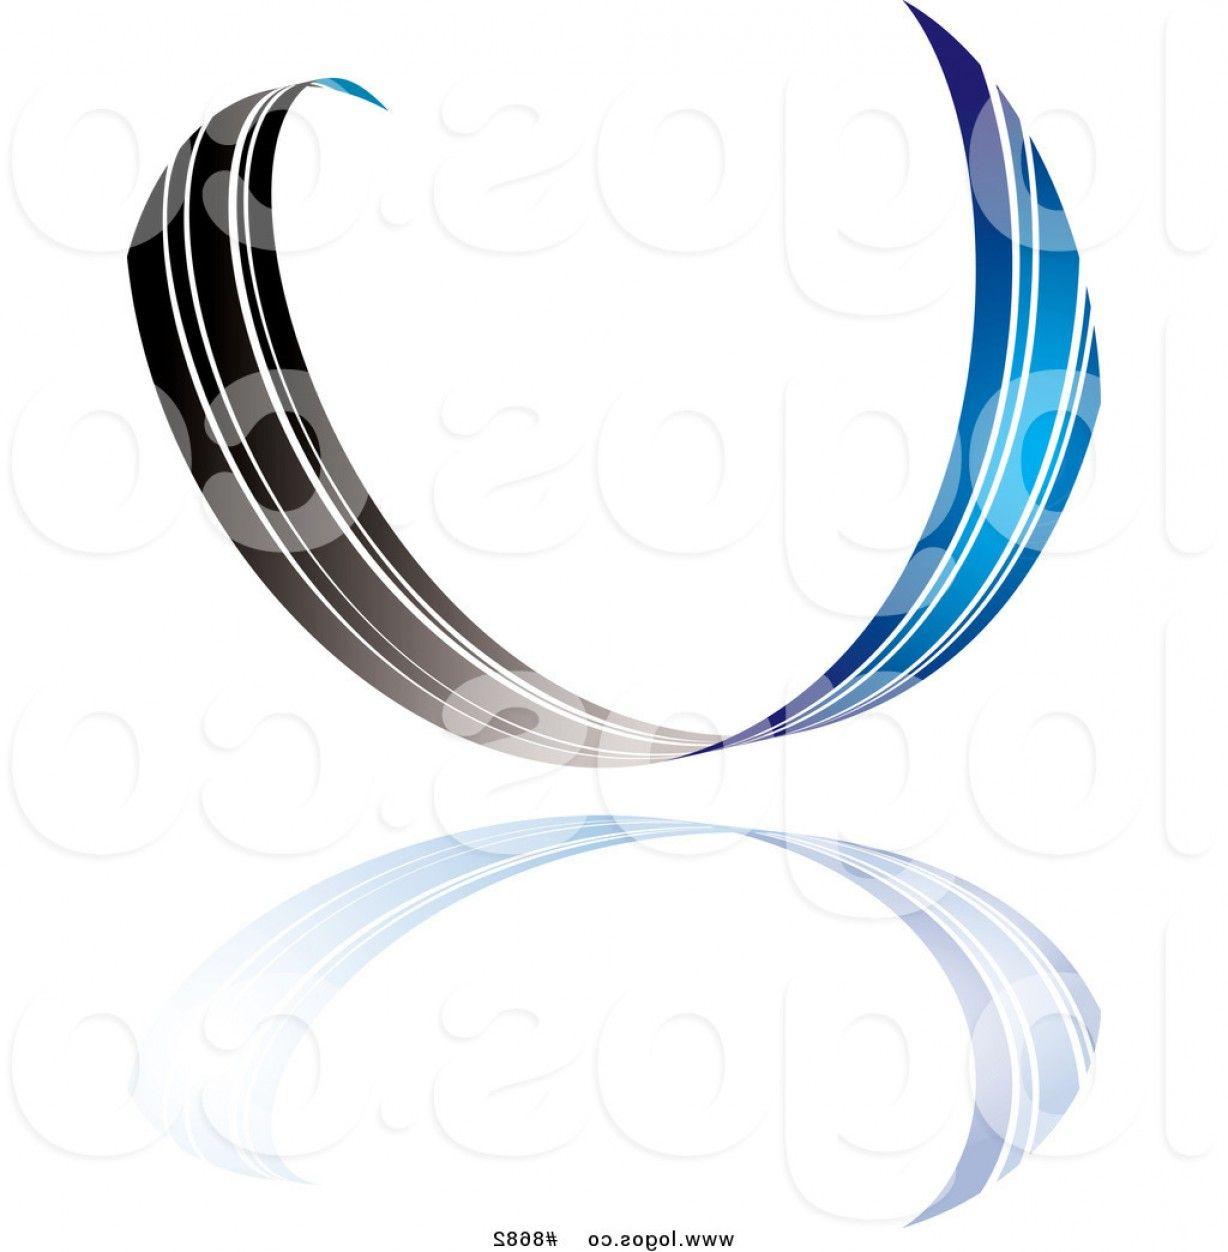 Black Ribbon Logo - Royalty Free Clip Art Vector Logo Of A Blue And Black Ribbon Wave By ...